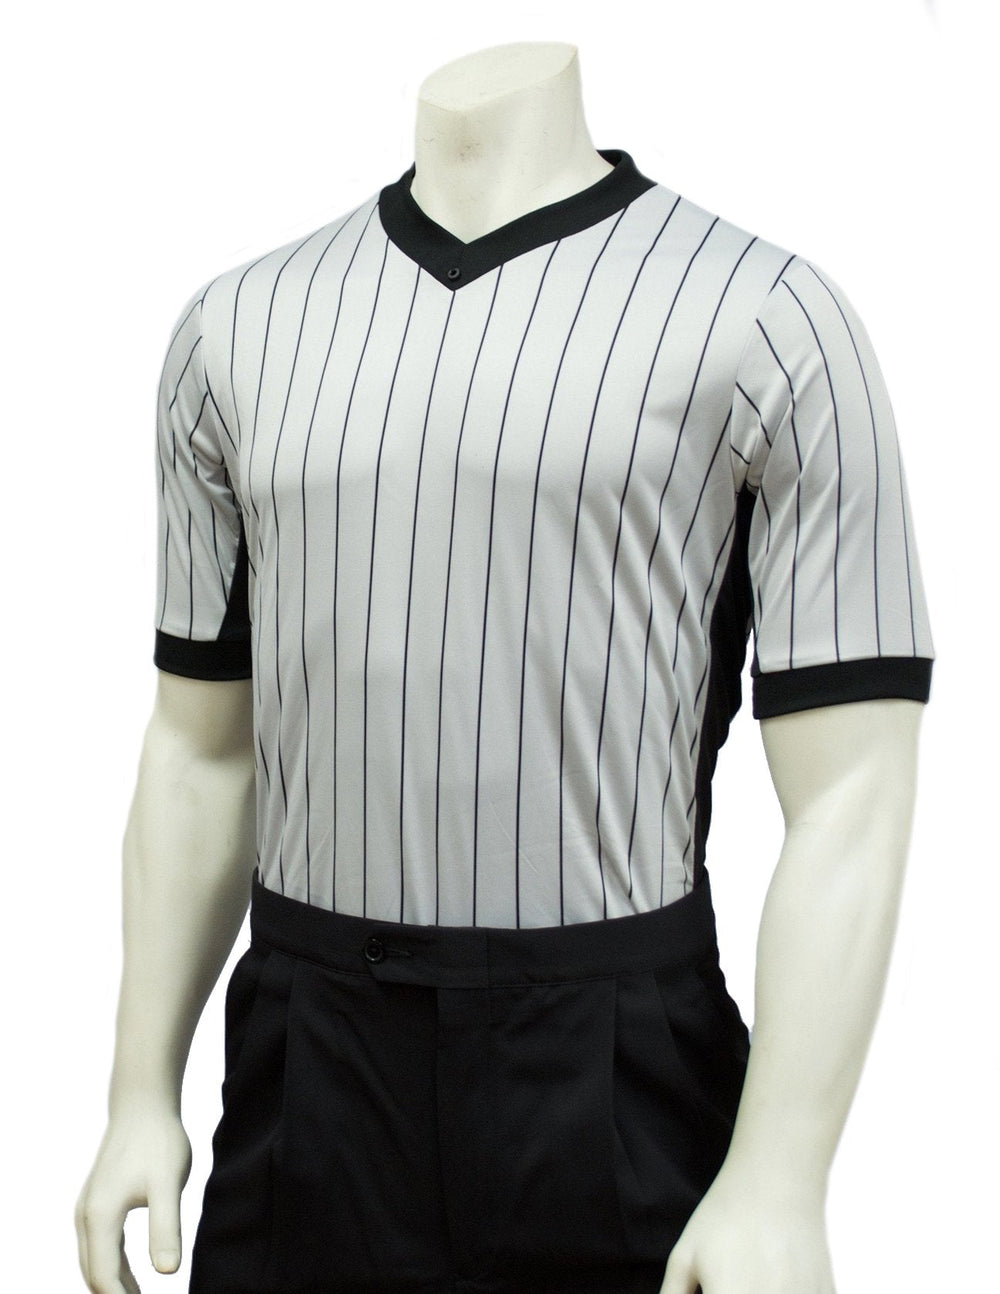 Smitty Grey Elite Performance Interlock V-Neck Shirt w/ Black Pinstripe and Side Panel